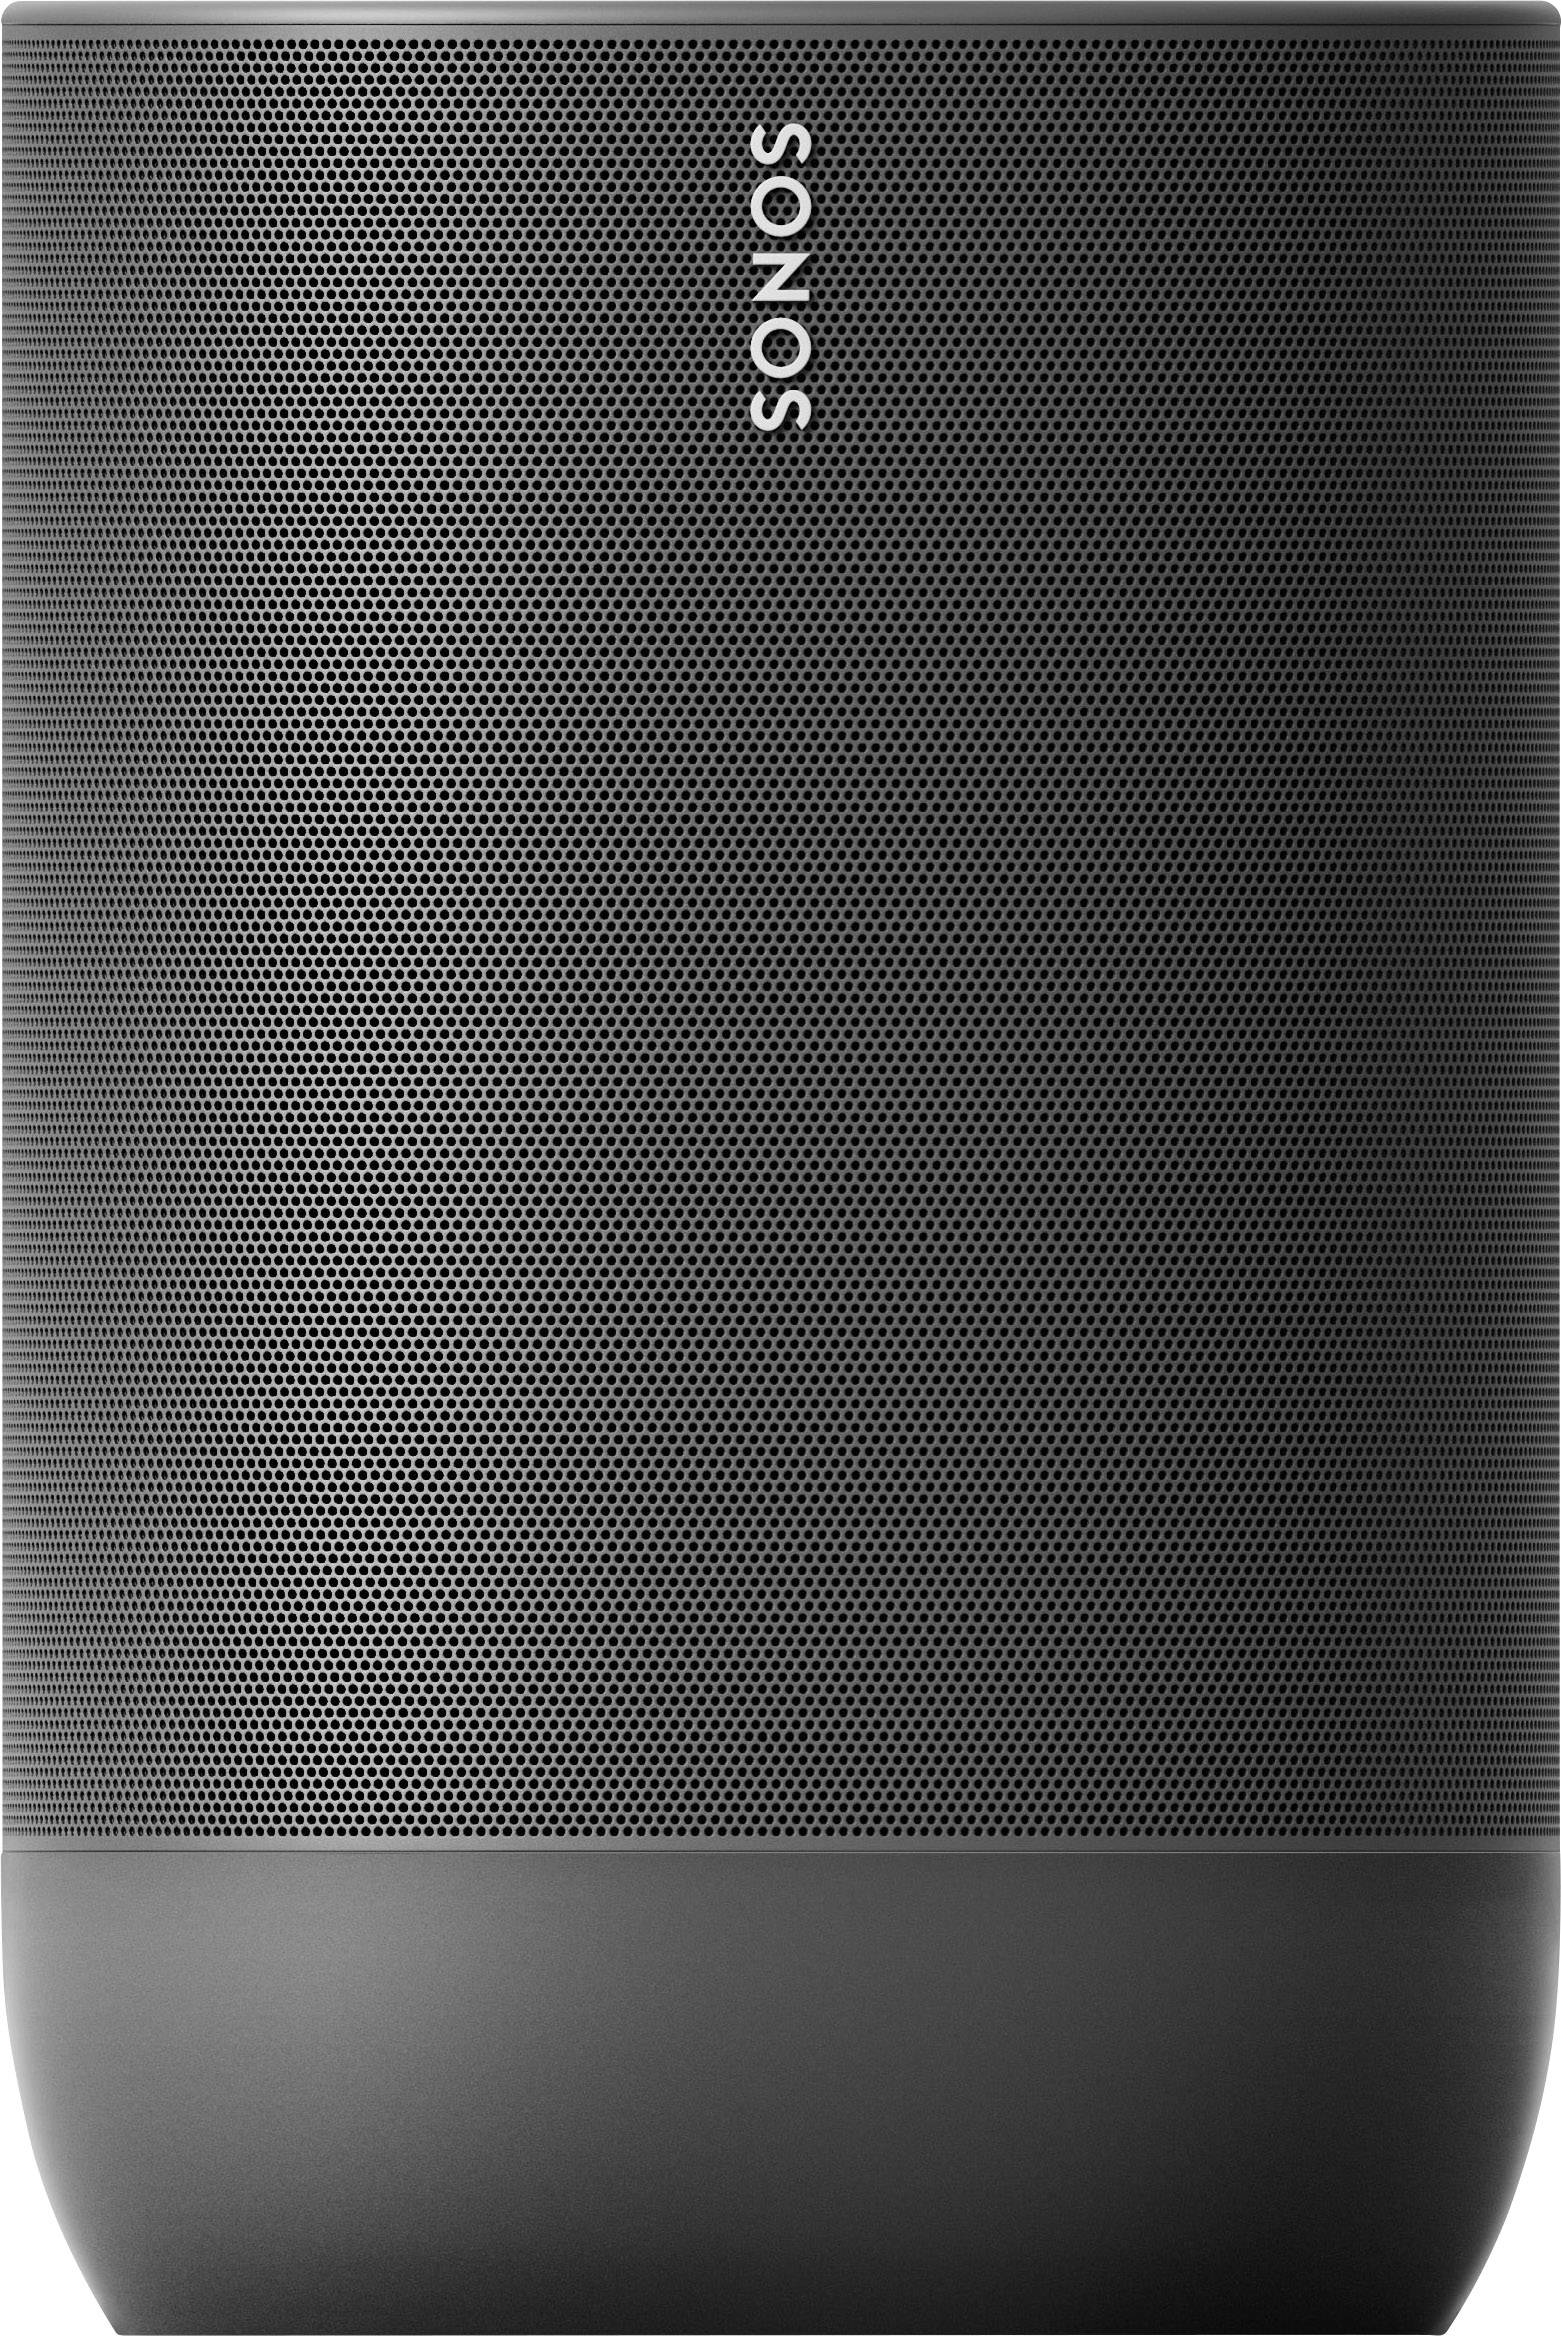 efterskrift Asser Hensigt Sonos Move Multi-room speaker AirPlay, Bluetooth, Wi-Fi Built-in Amazon  Alexa, Built-in Google Assistant, Outdoor, shoc | Conrad.com